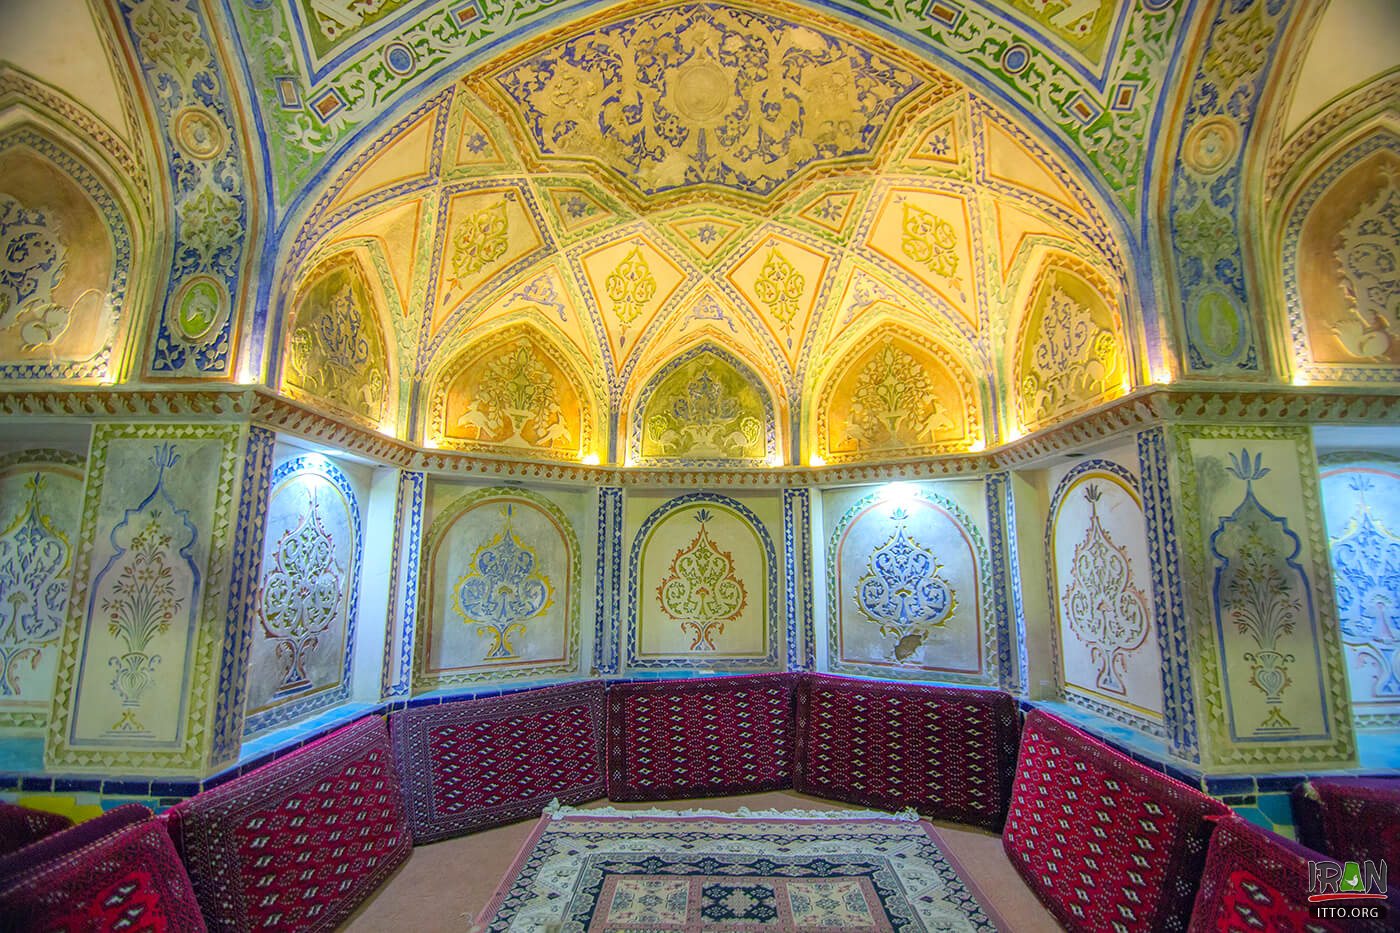 The Magnificent Sultan Amir Ahmad Bathhouse in Kashan, Iran